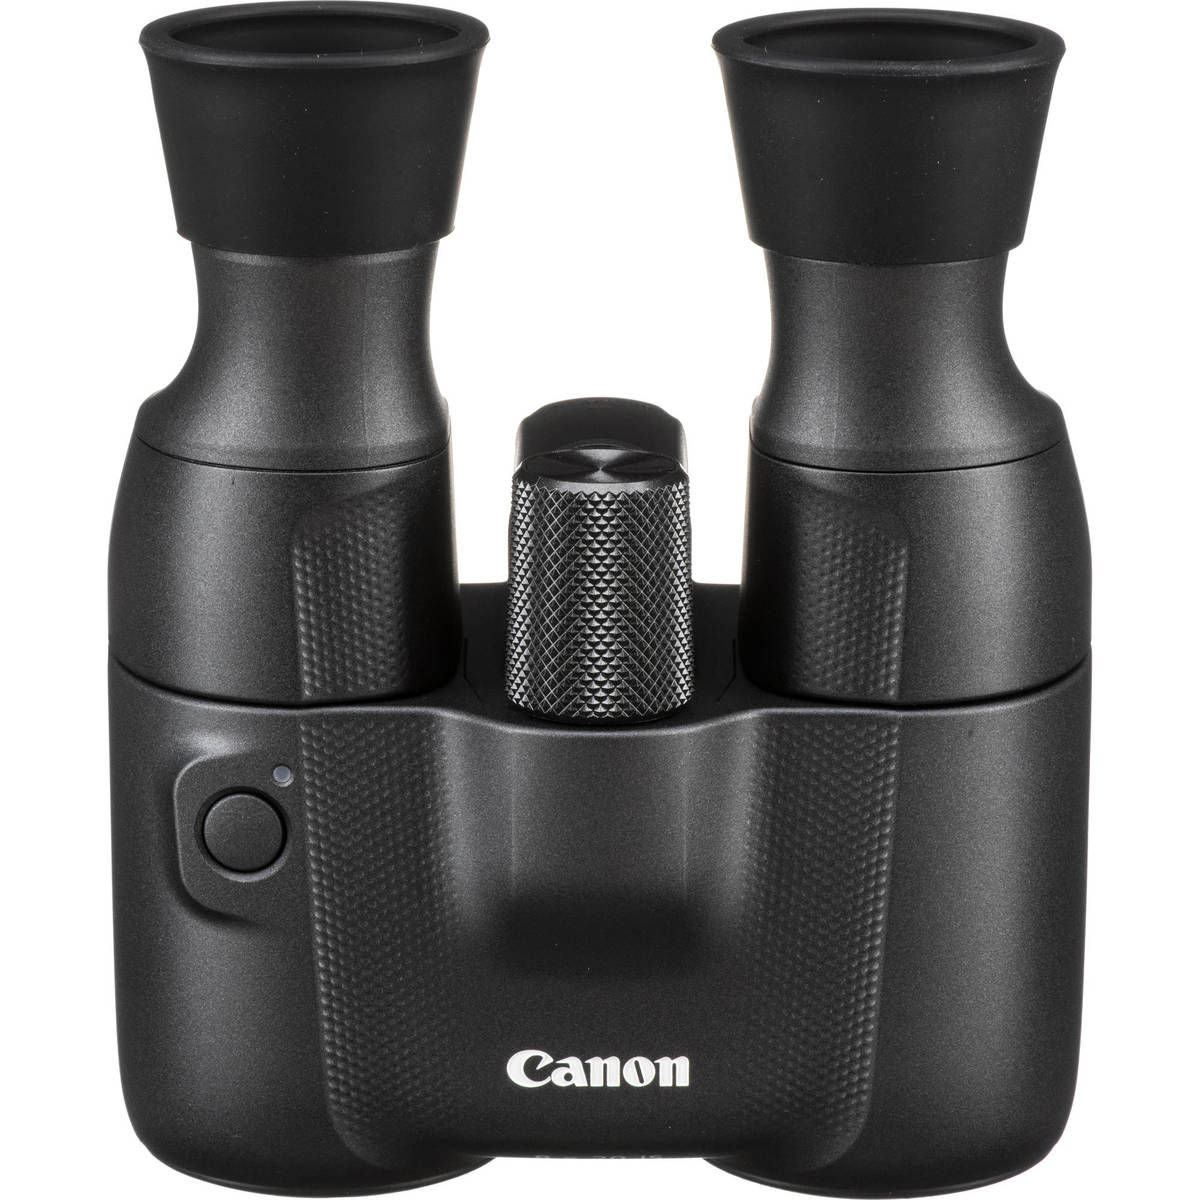 Main Image Canon 8x20 IS Binoculars